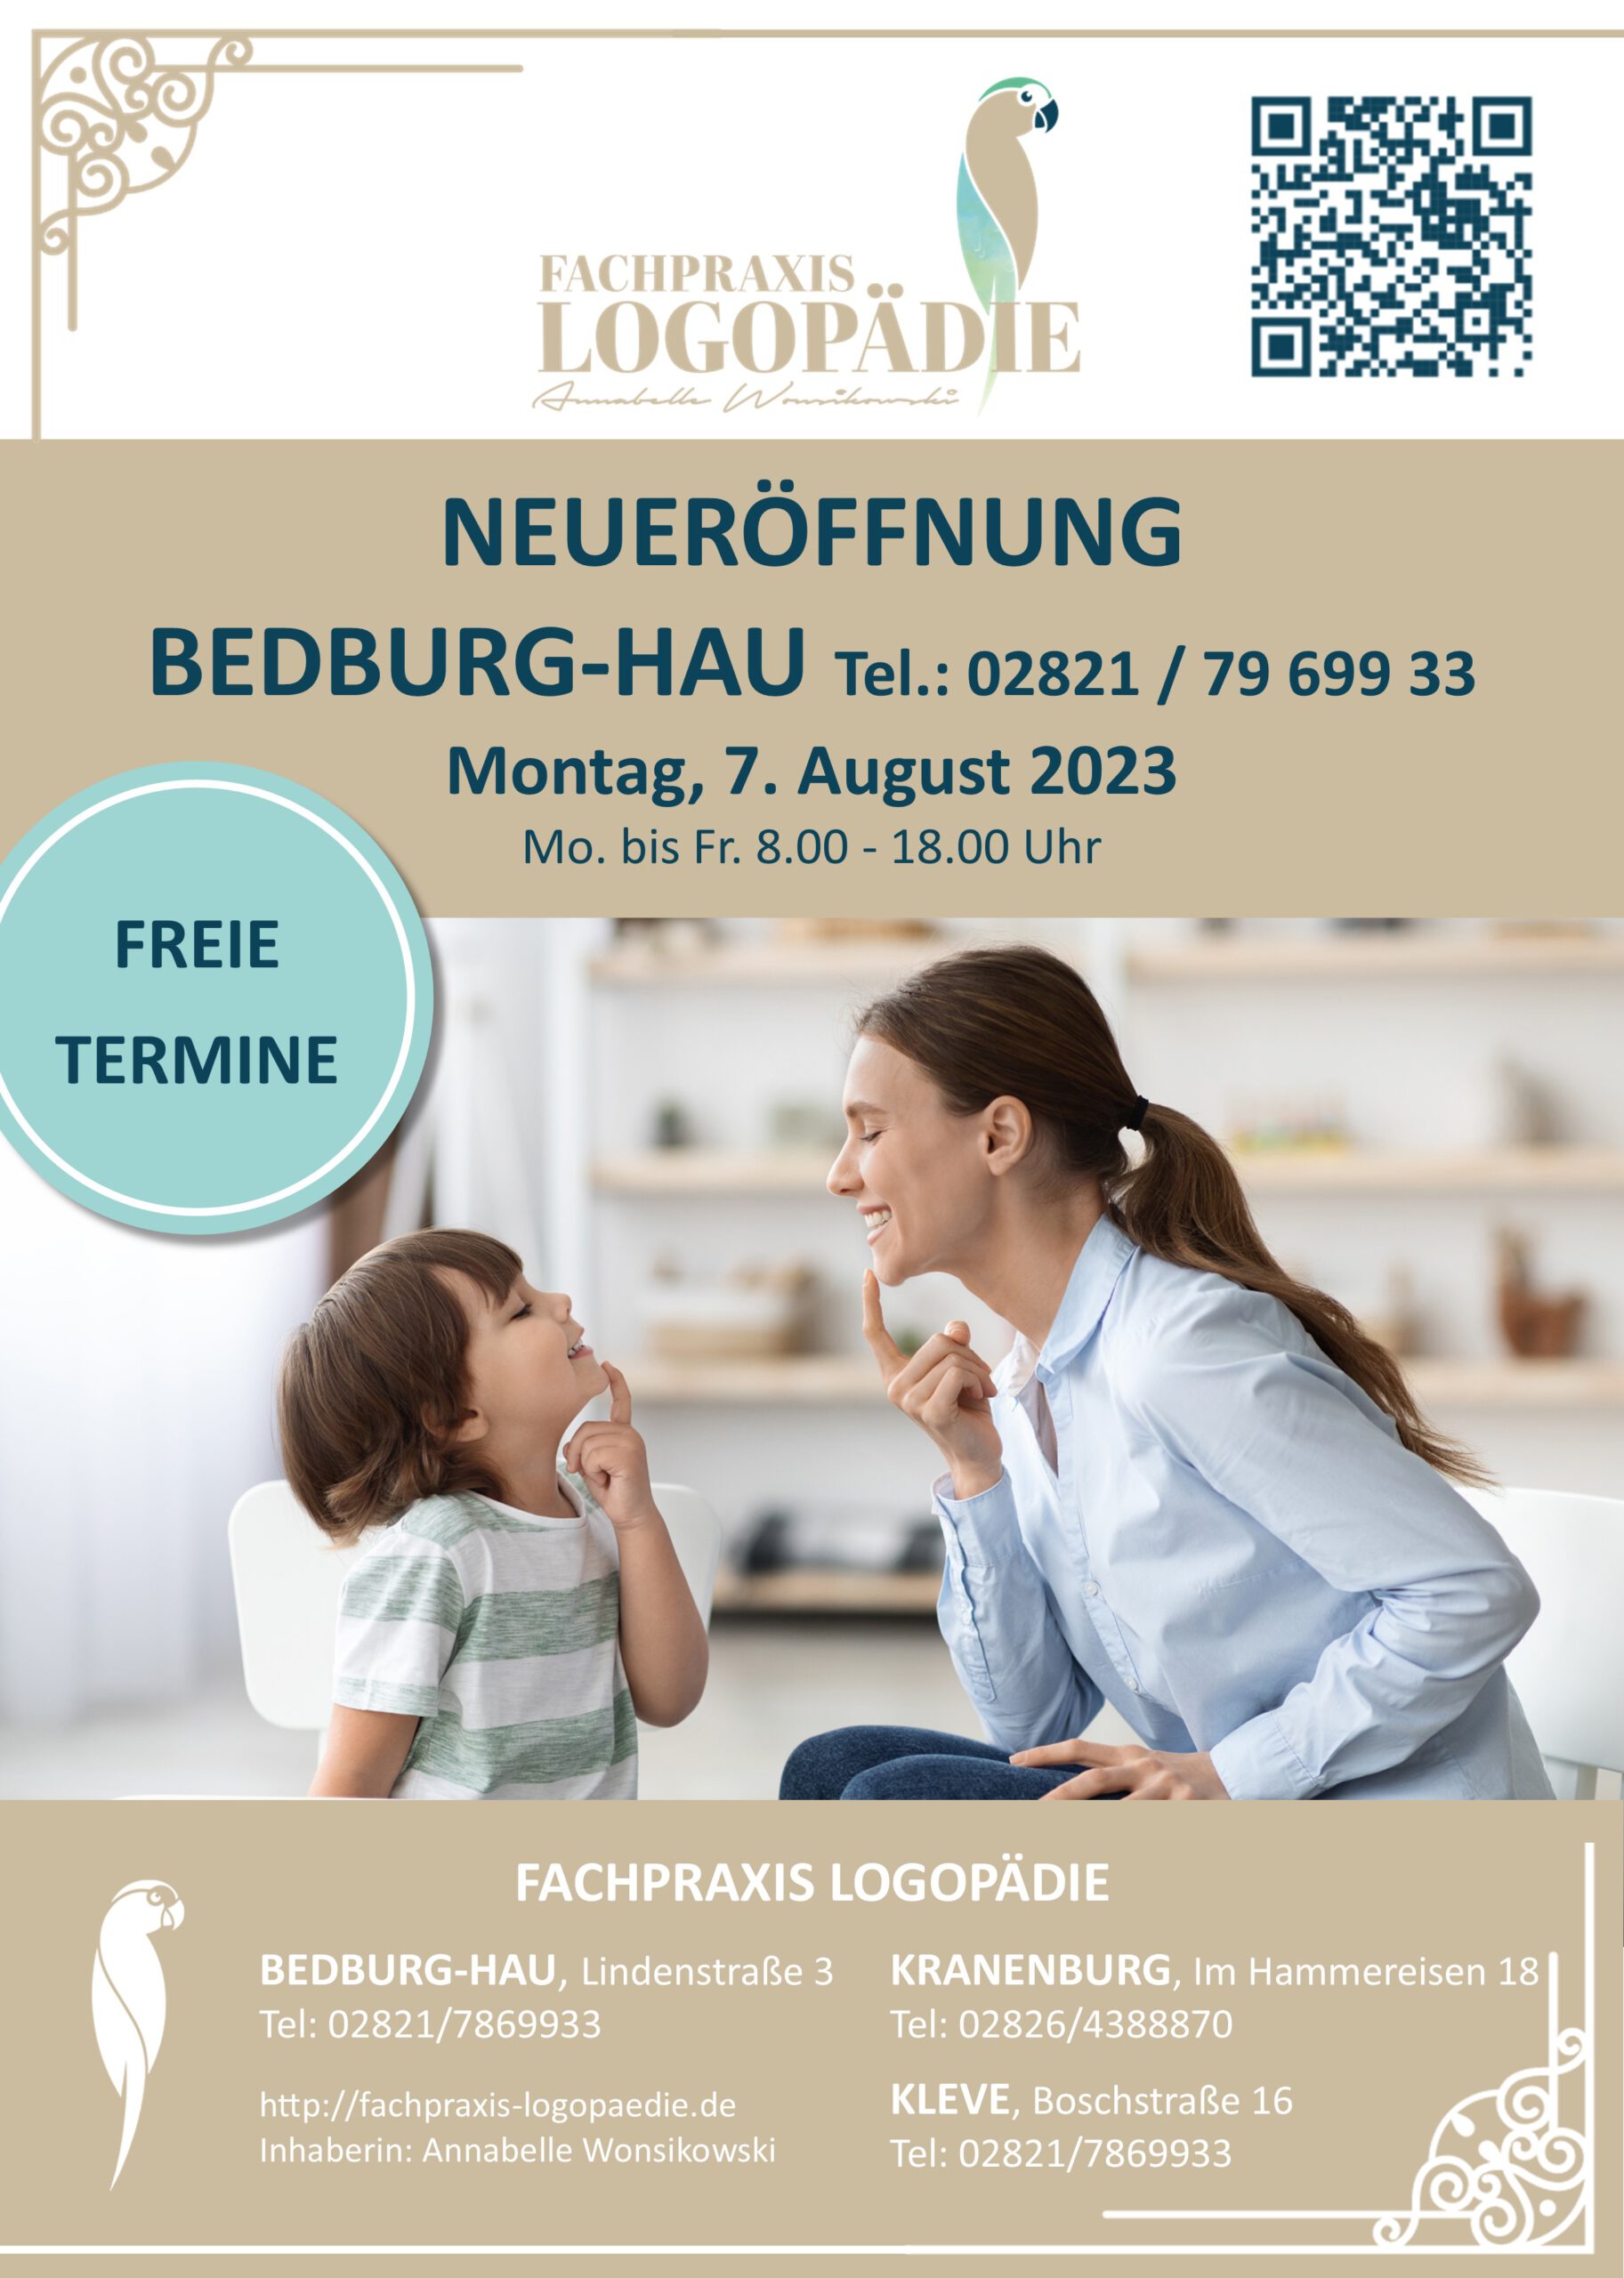 Eröffnung Fachpraxis Logopädie Bedburg-Hau